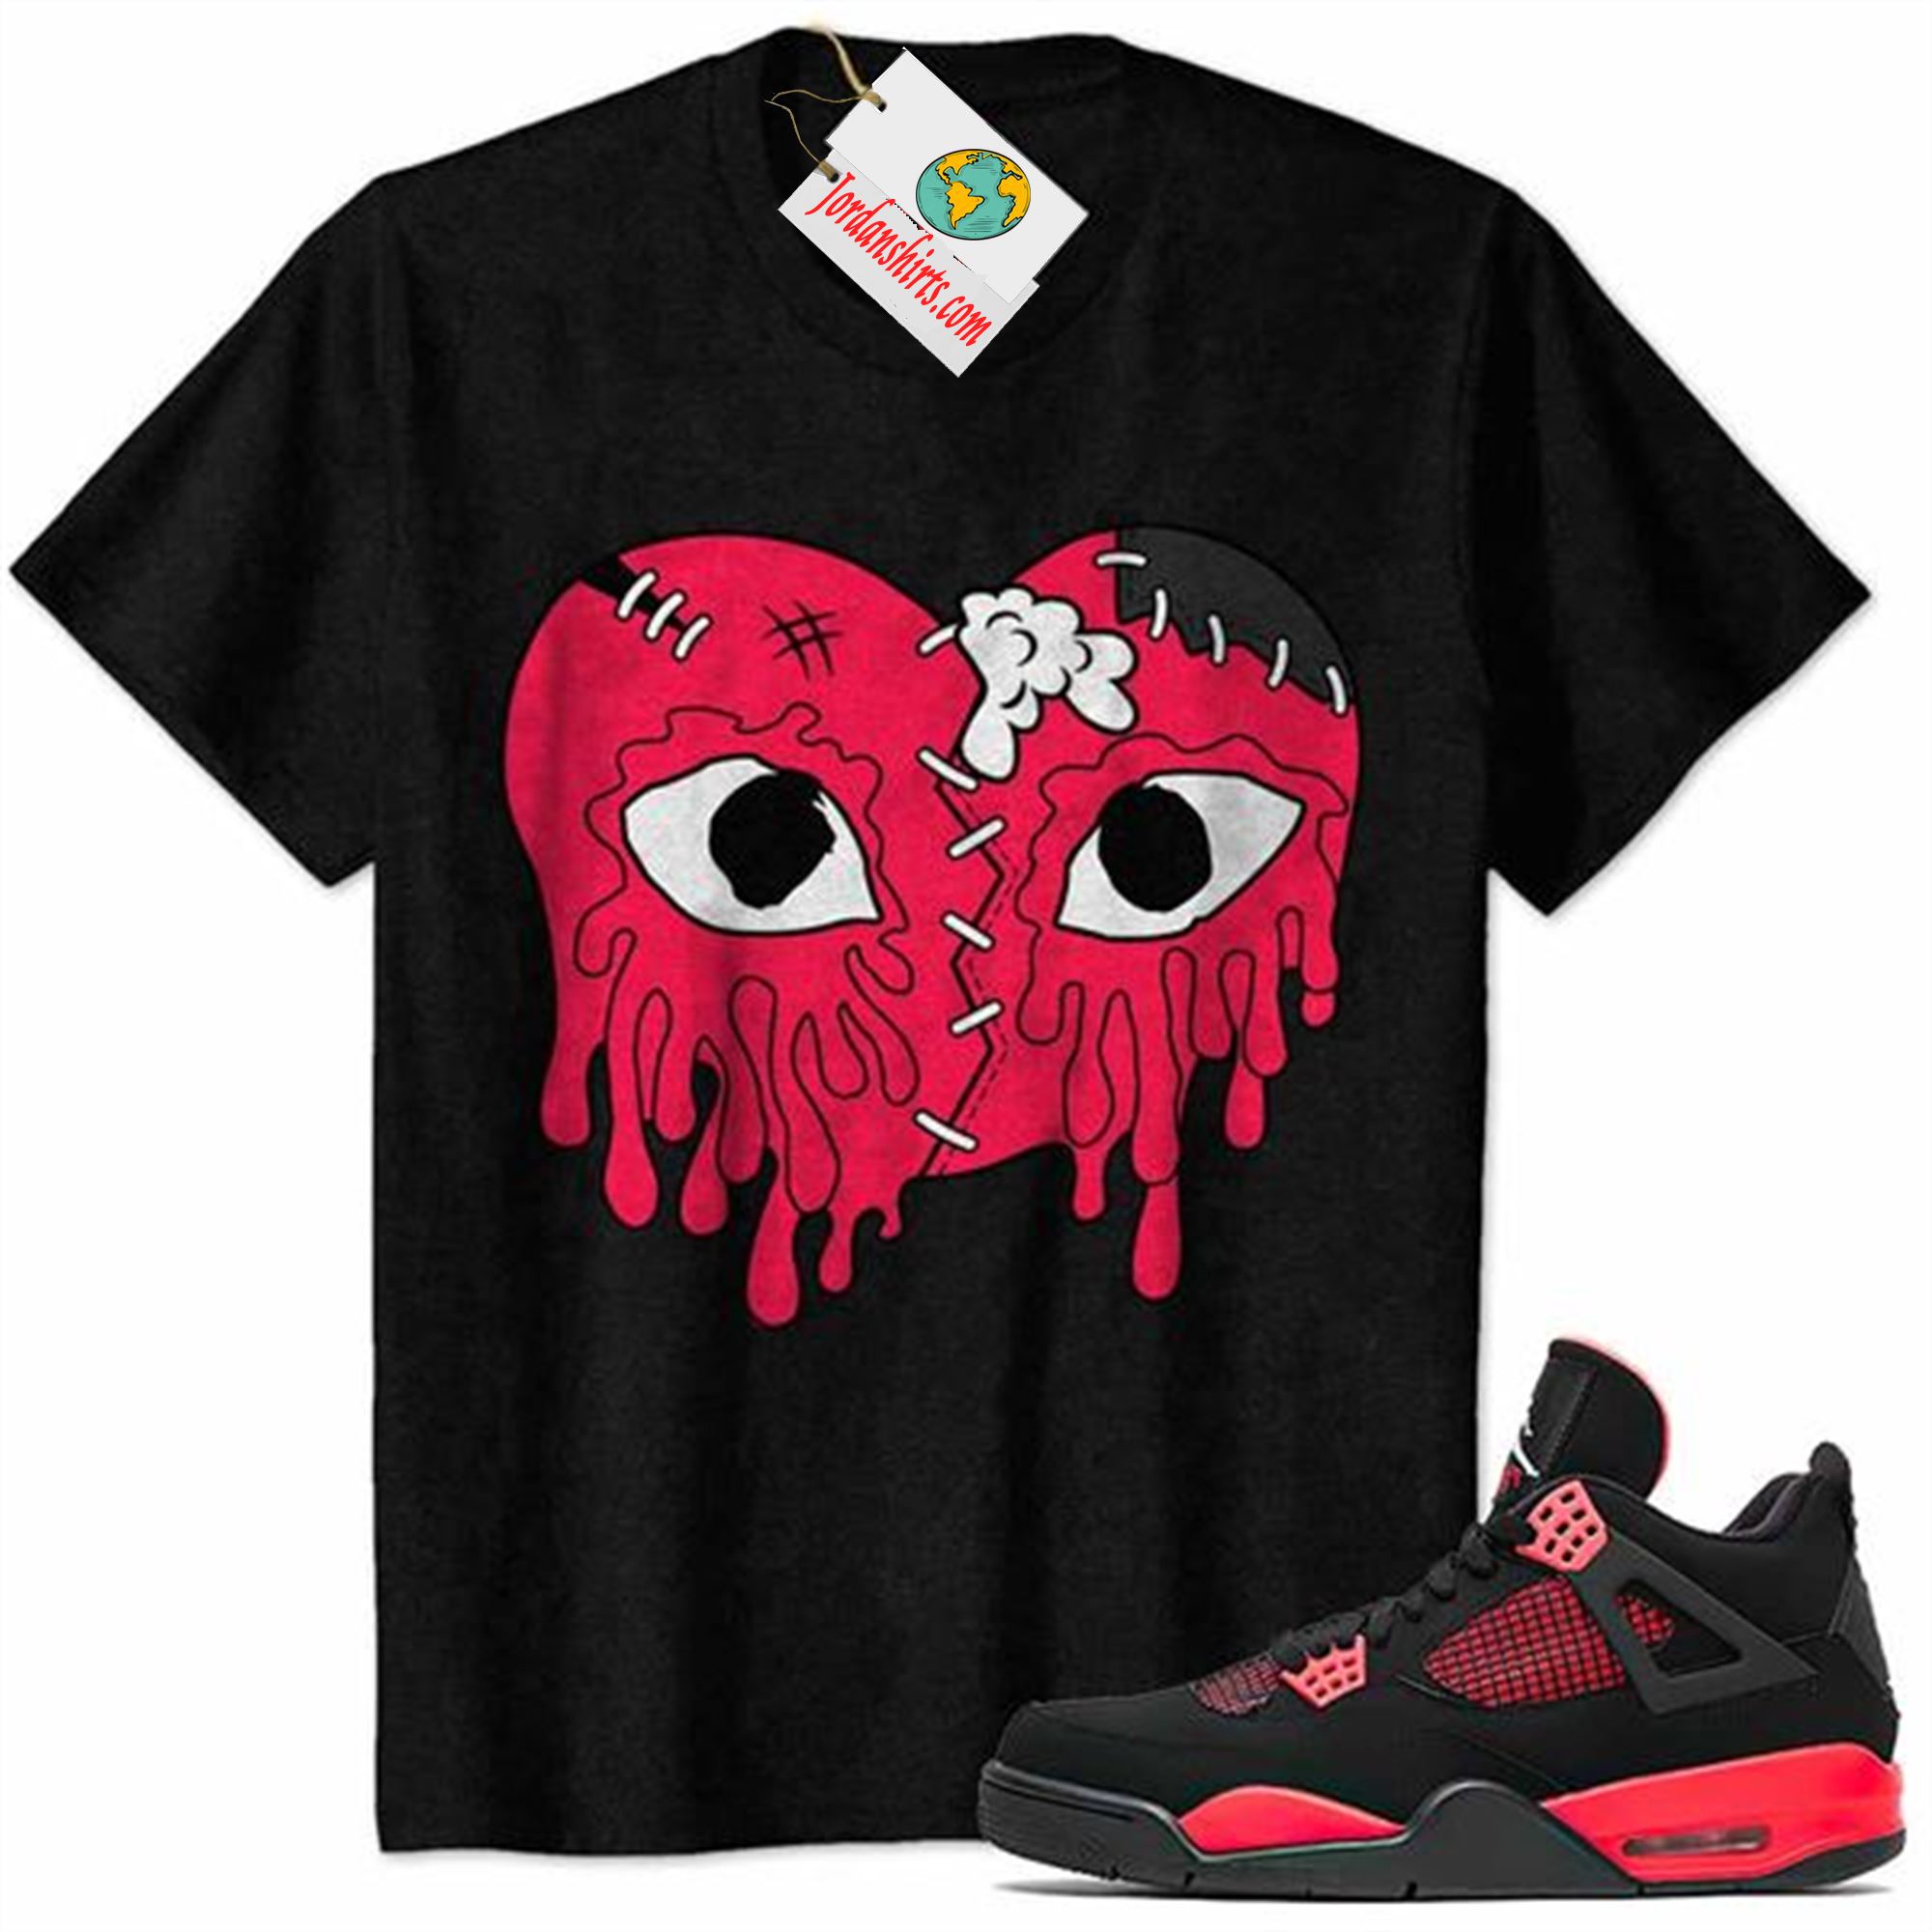 Jordan 4 Shirt, Crying Heart Drip Black Air Jordan 4 Red Thunder 4s Size Up To 5xl